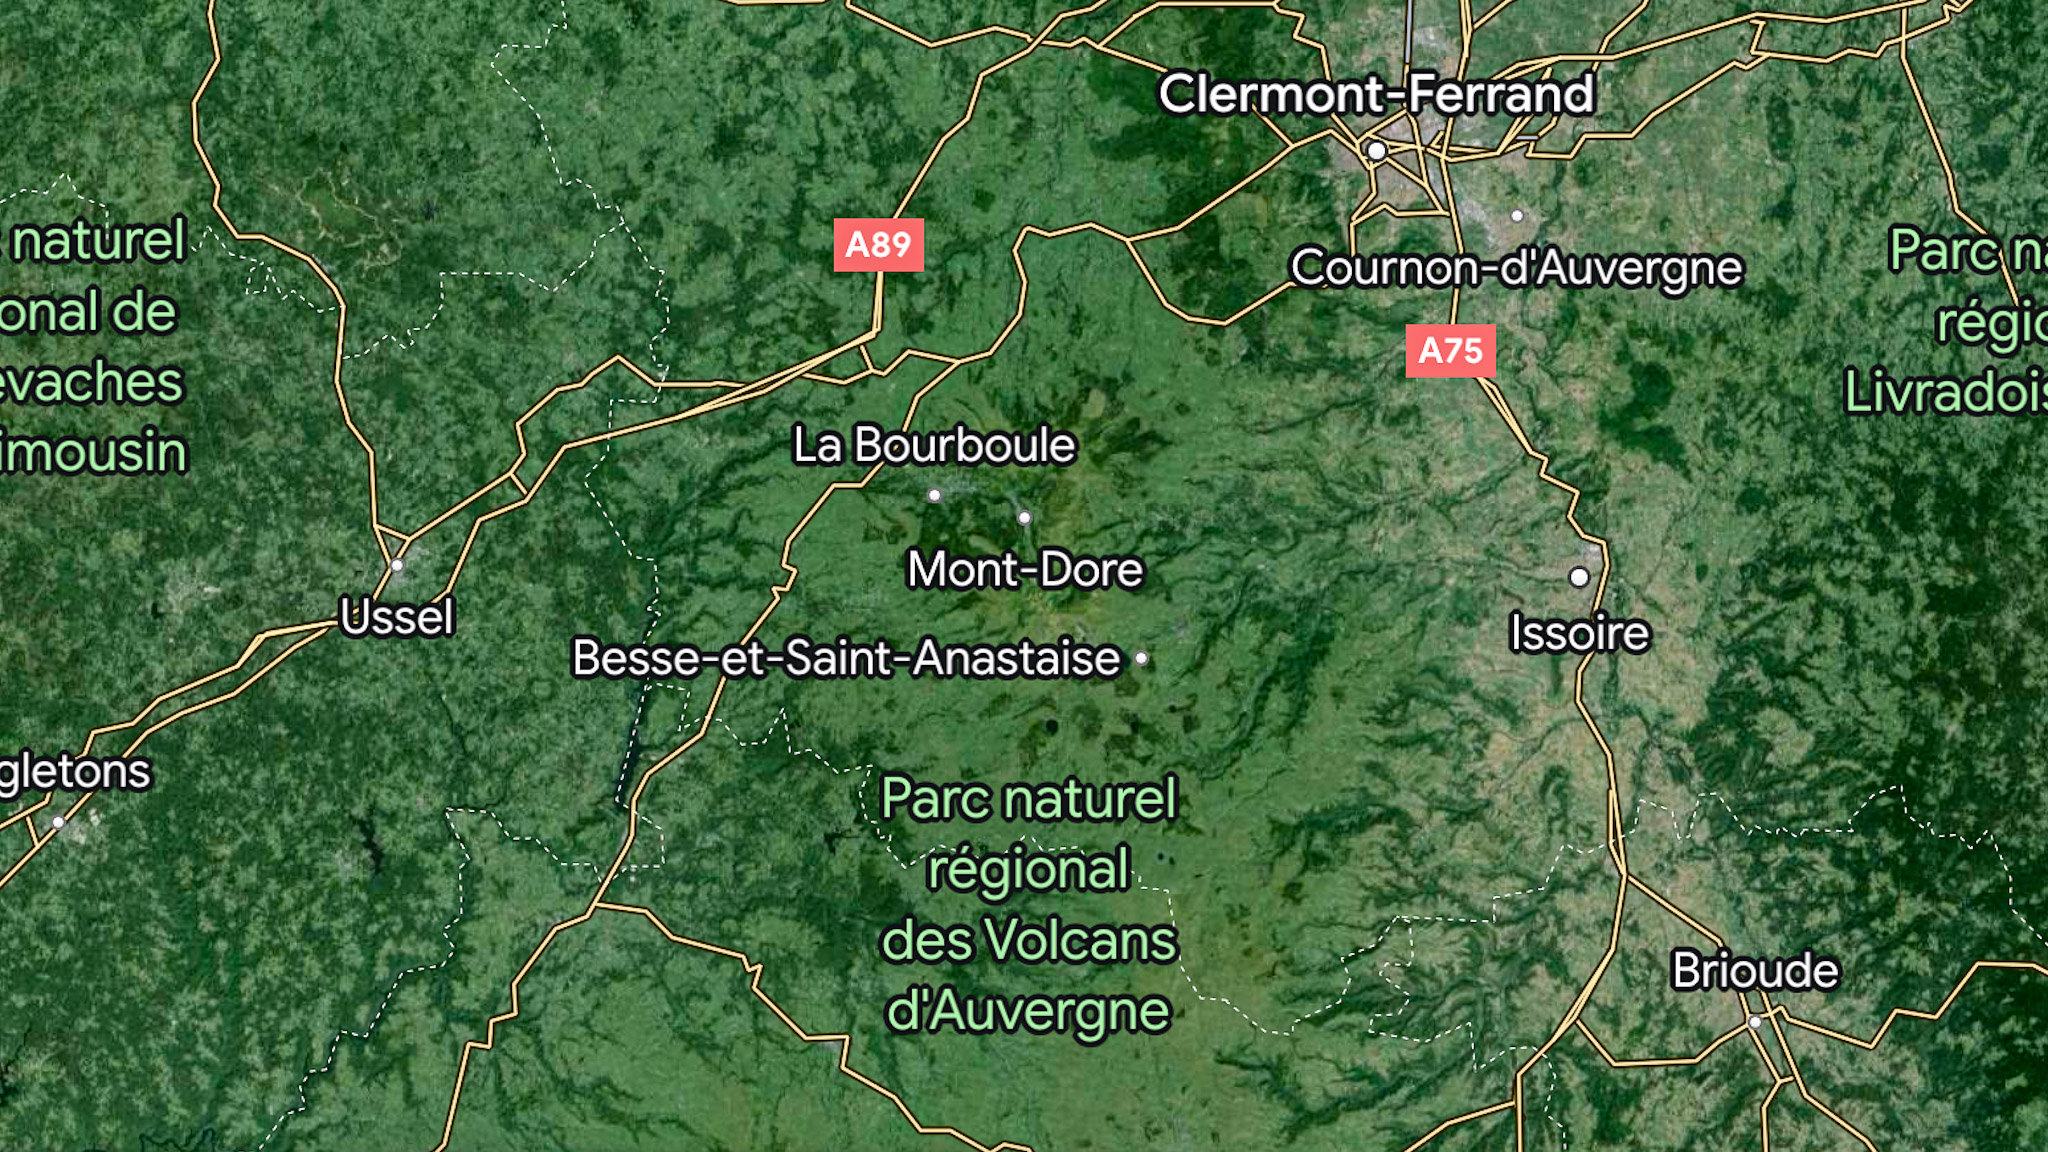 Satellite view of the Auvergne Volcanoes Regional Natural Park